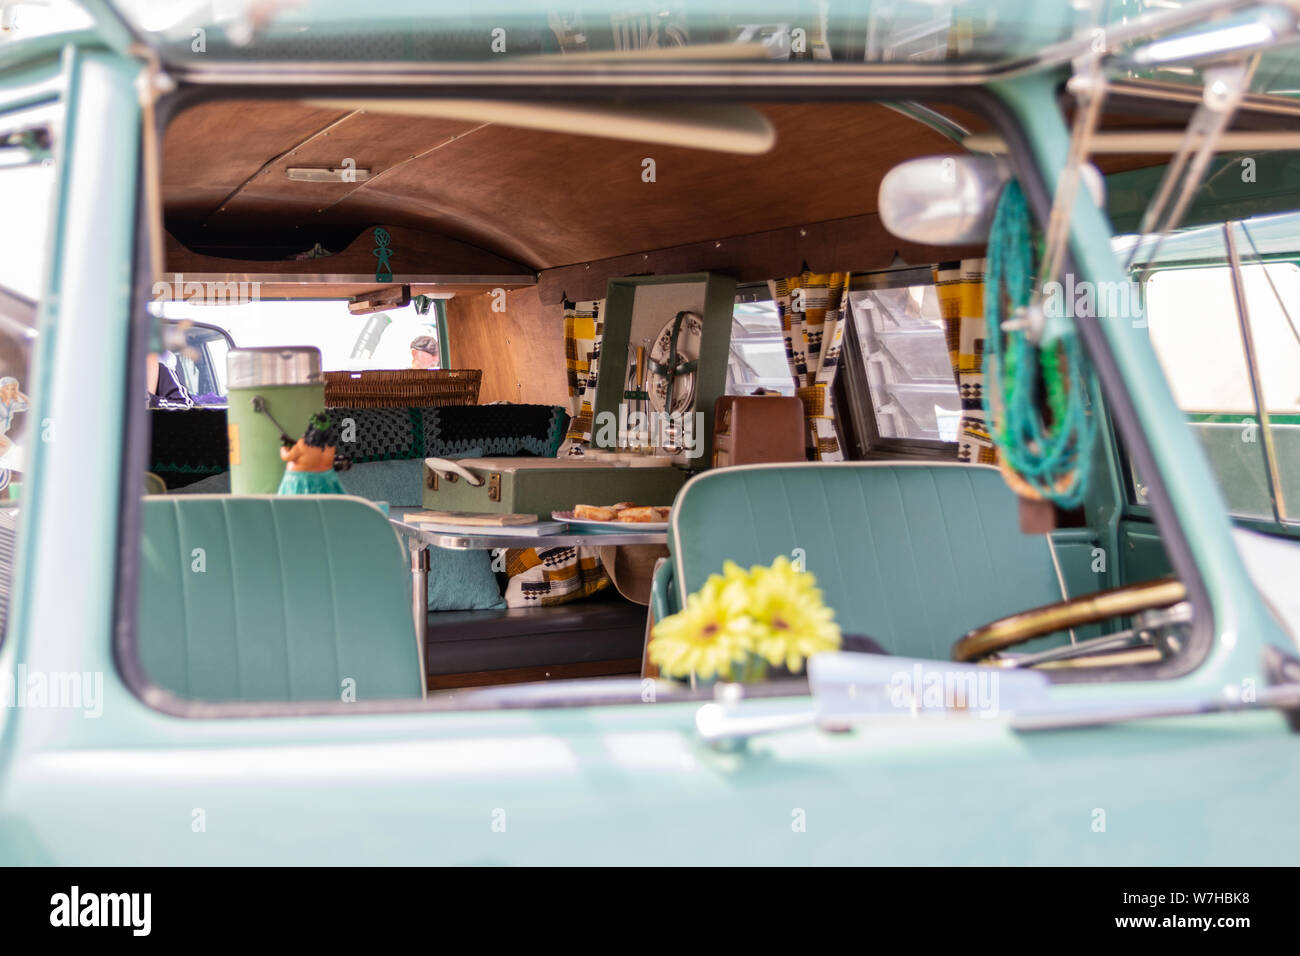 The Interior Of A Vintage Camper Van With A Vintage Picnic